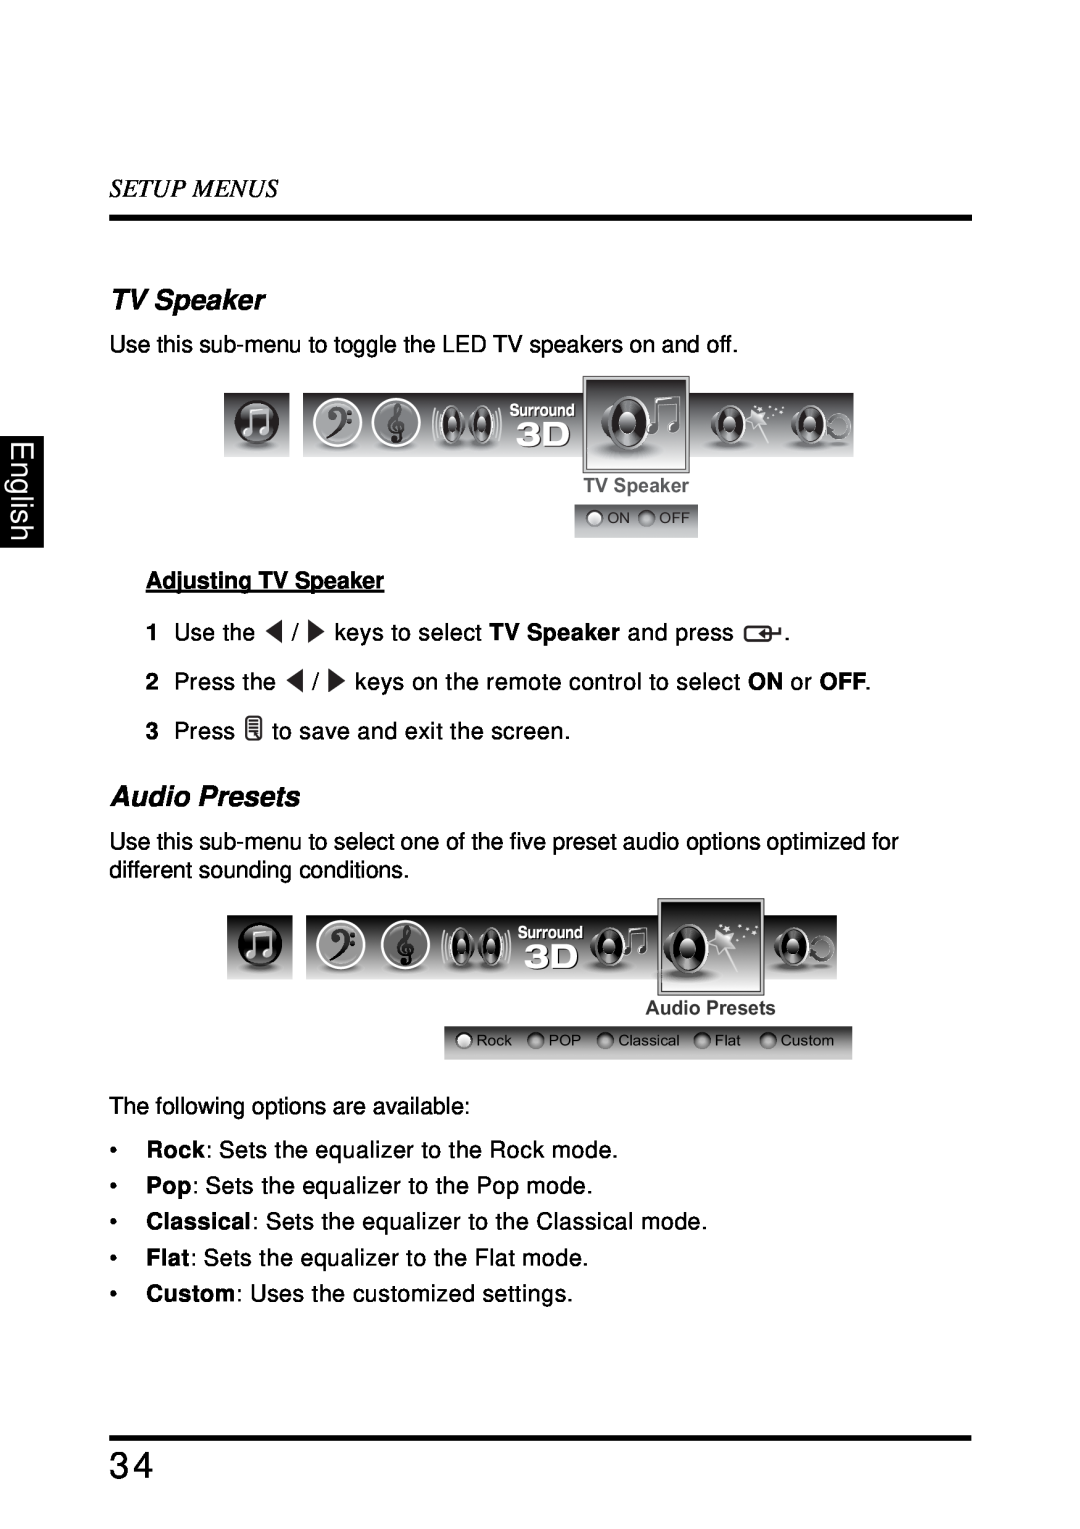 Westinghouse LD-4680 user manual Audio Presets, English, Setup Menus, Adjusting TV Speaker 